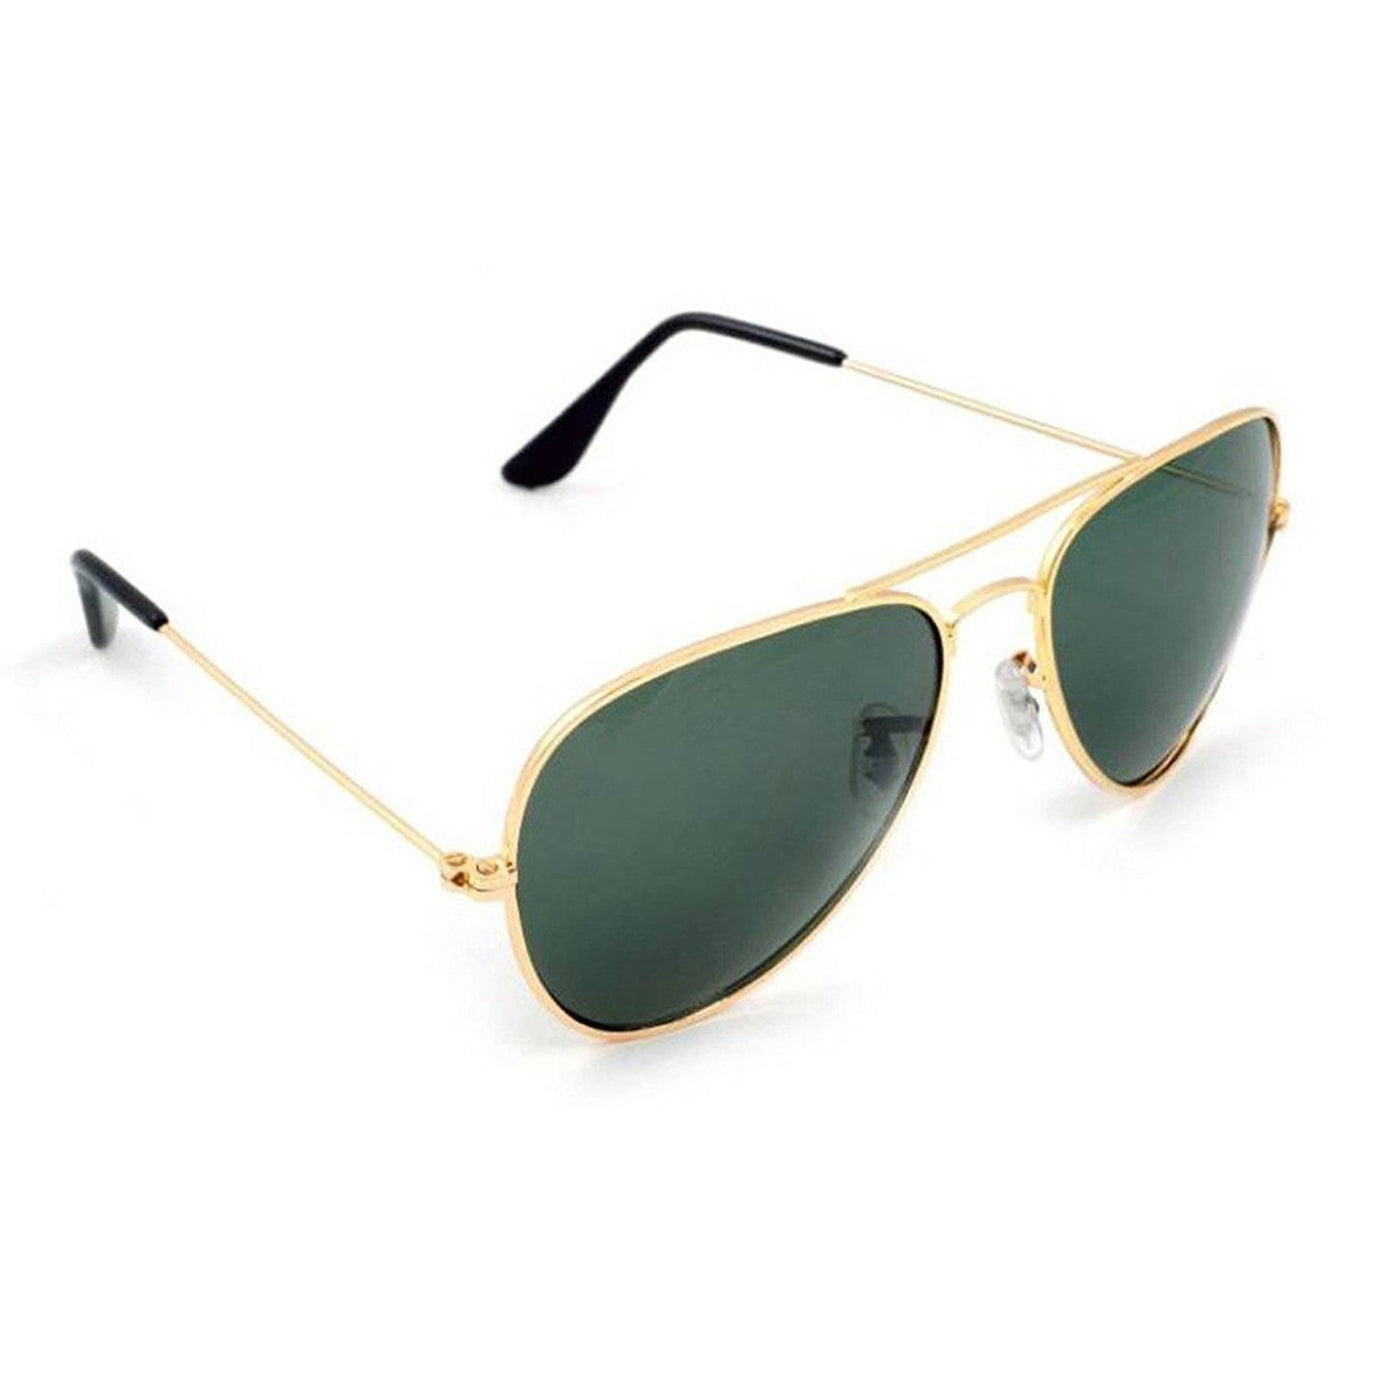 Stylish Green Aviator Sunglasses For Men And Women-Unique and Classy